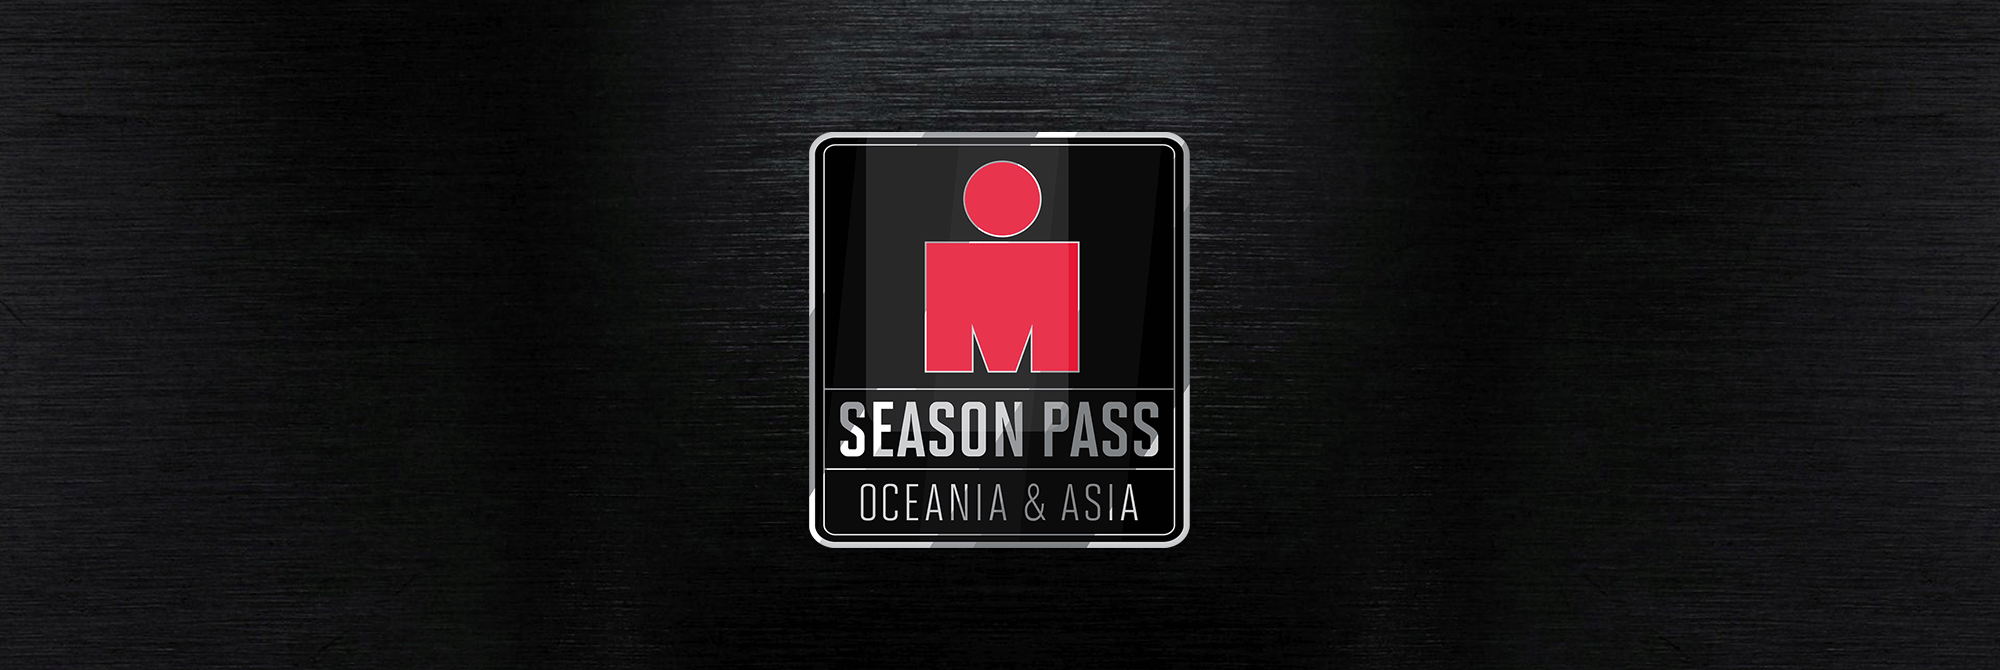 Season Pass - Oceania & Asia